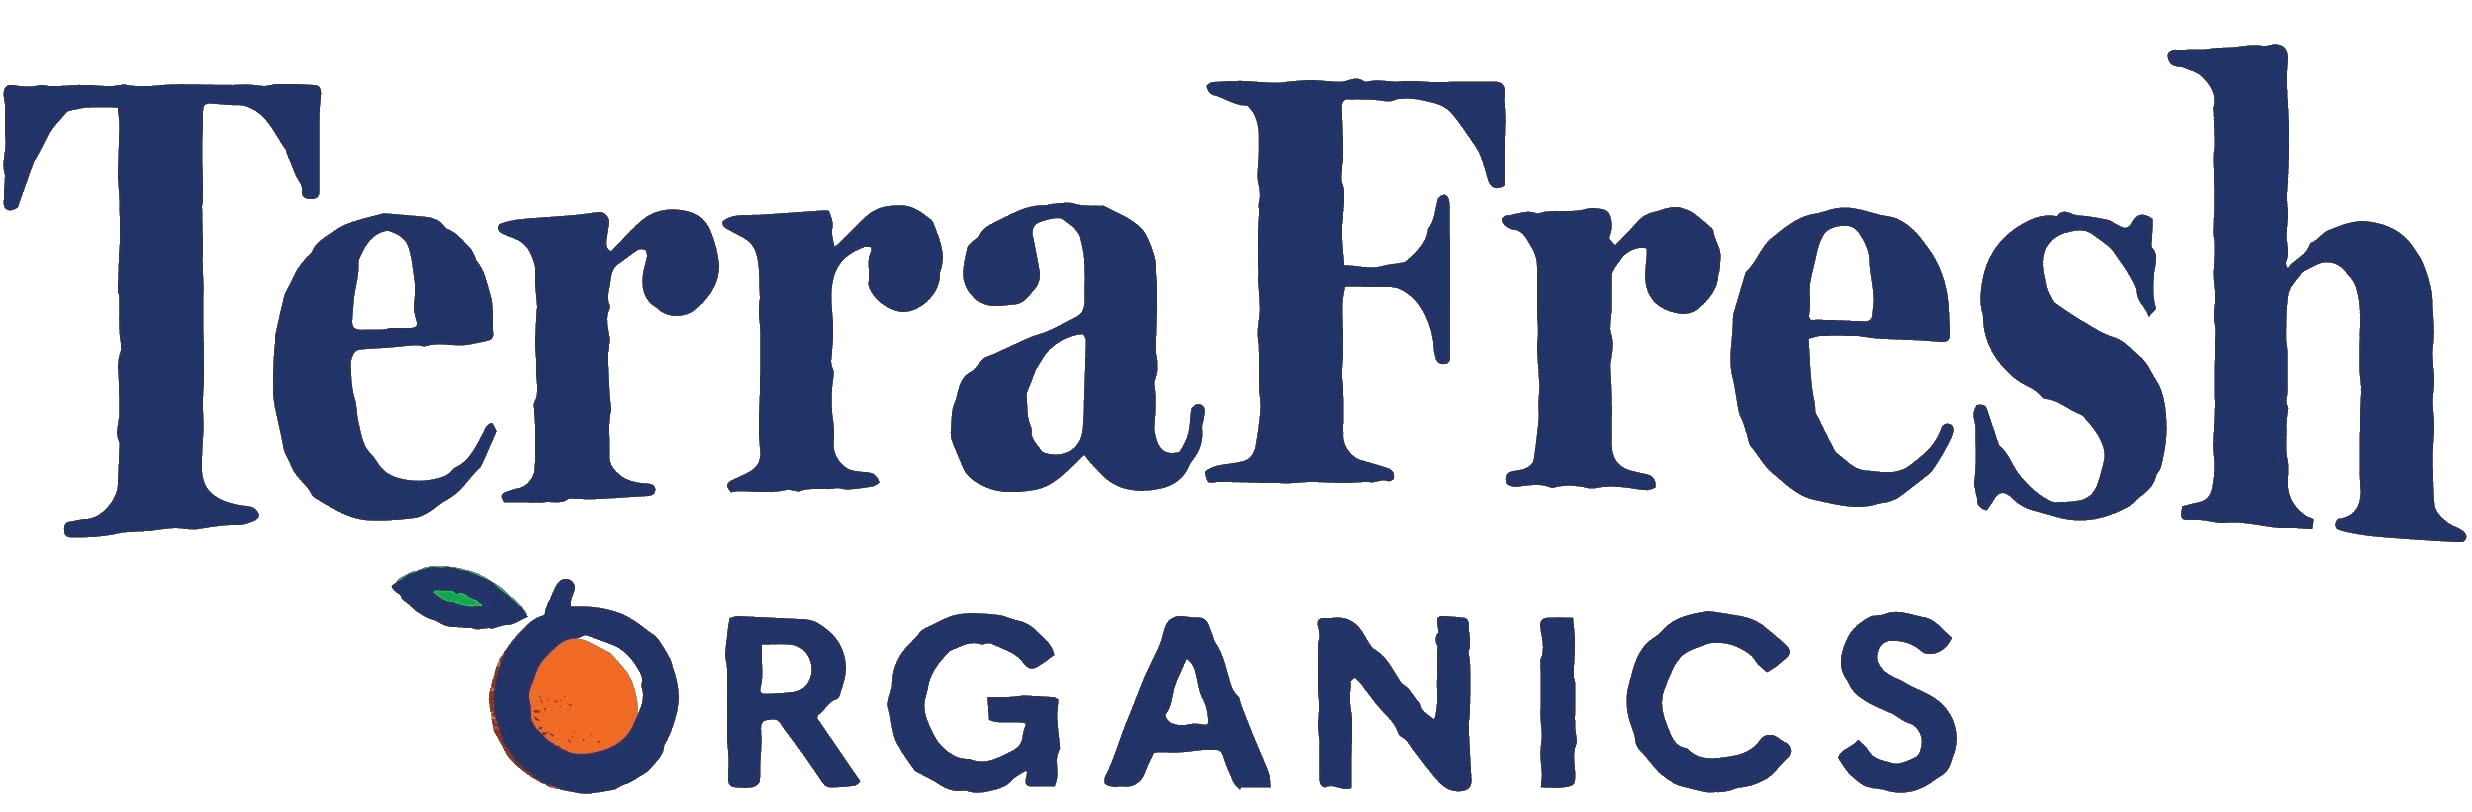 Terrafresh Organics